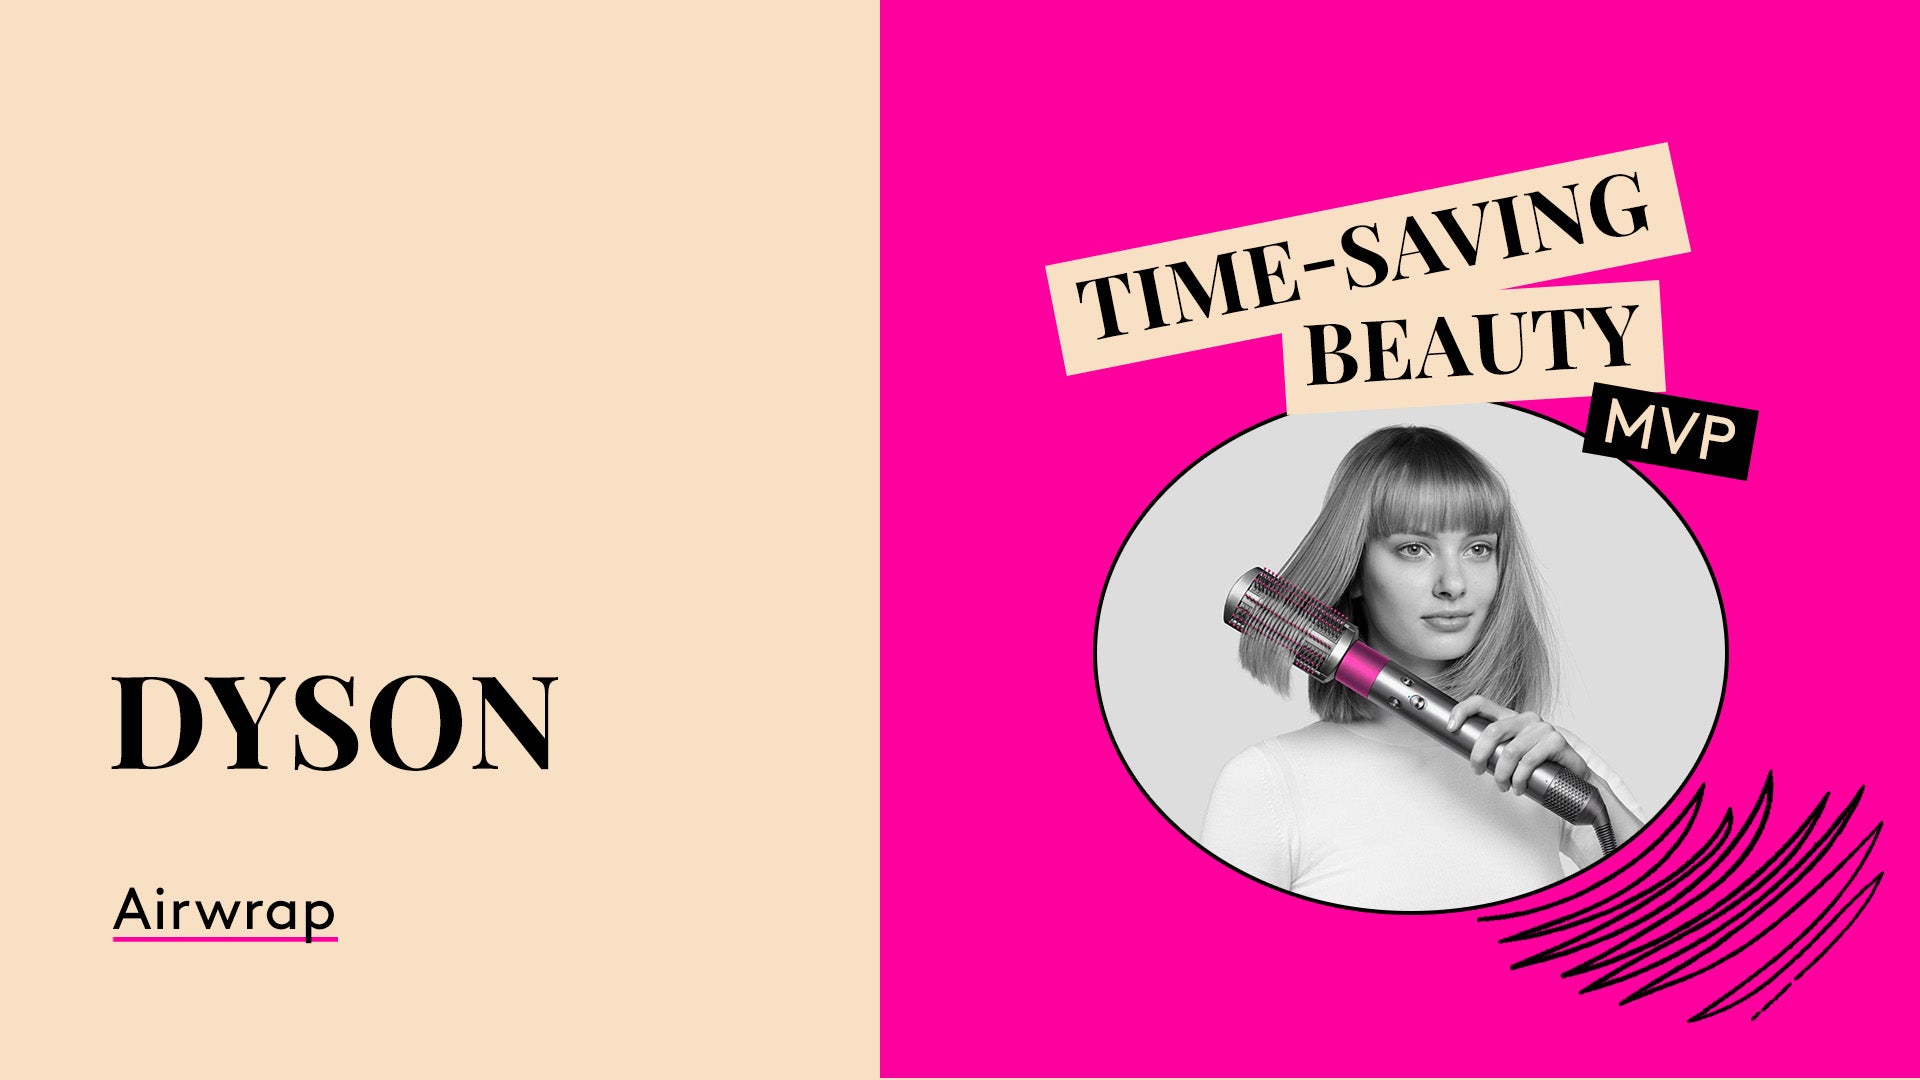 Time-Saving Beauty Product MVP. Dyson Airwrap.